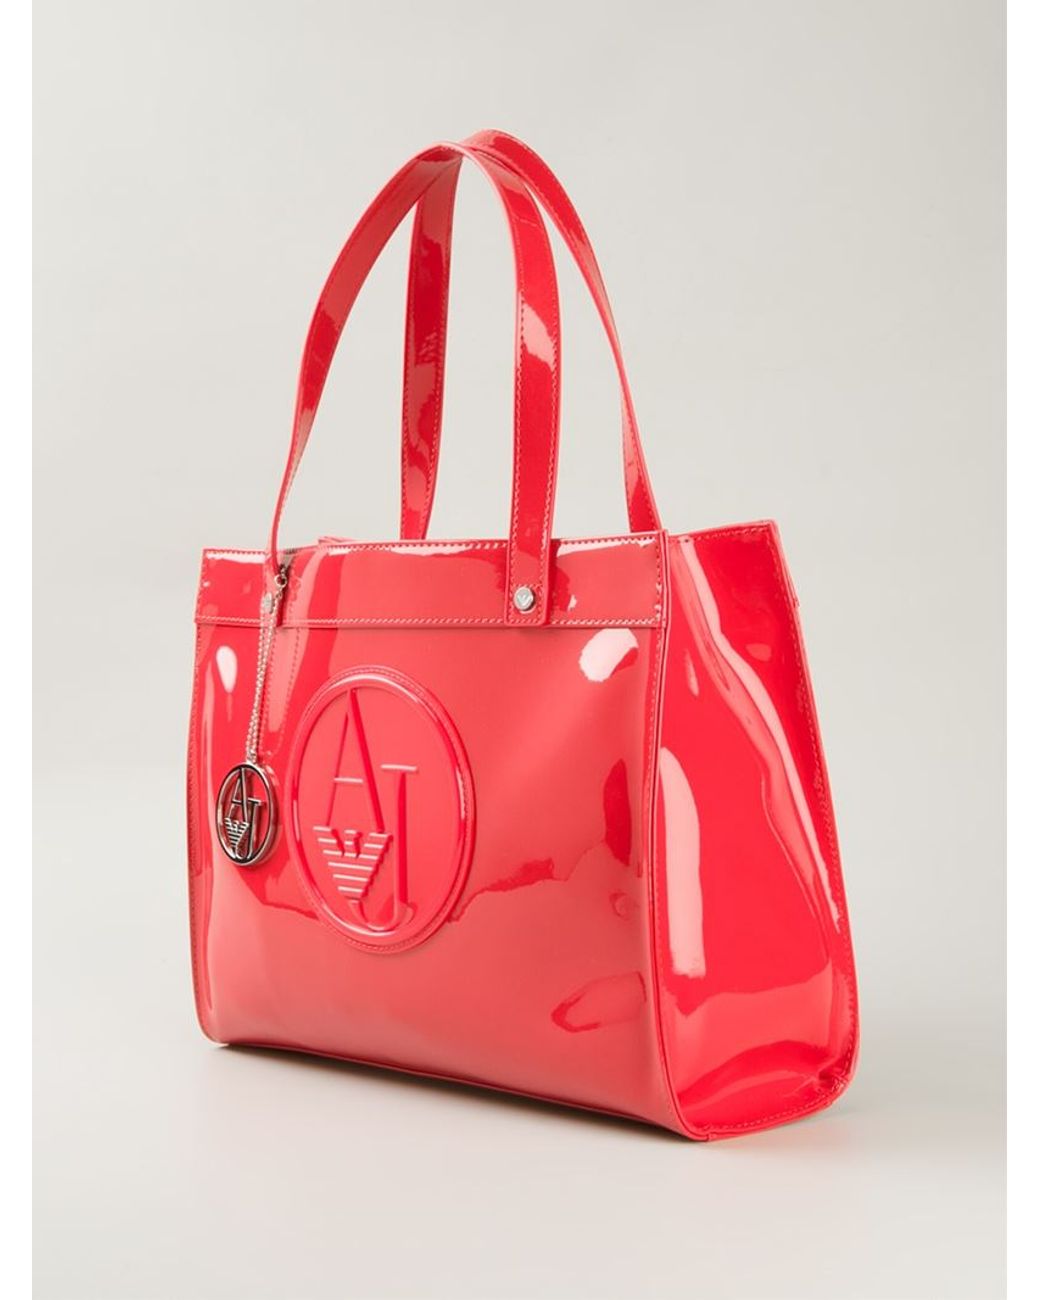 Armani Jeans Women's RJ Bugatti Bag | Accessorising - Brand Name / Designer  Handbags For Carry & Wear... Share If You Care! | Bags, Bugatti bag, Armani  jeans bags